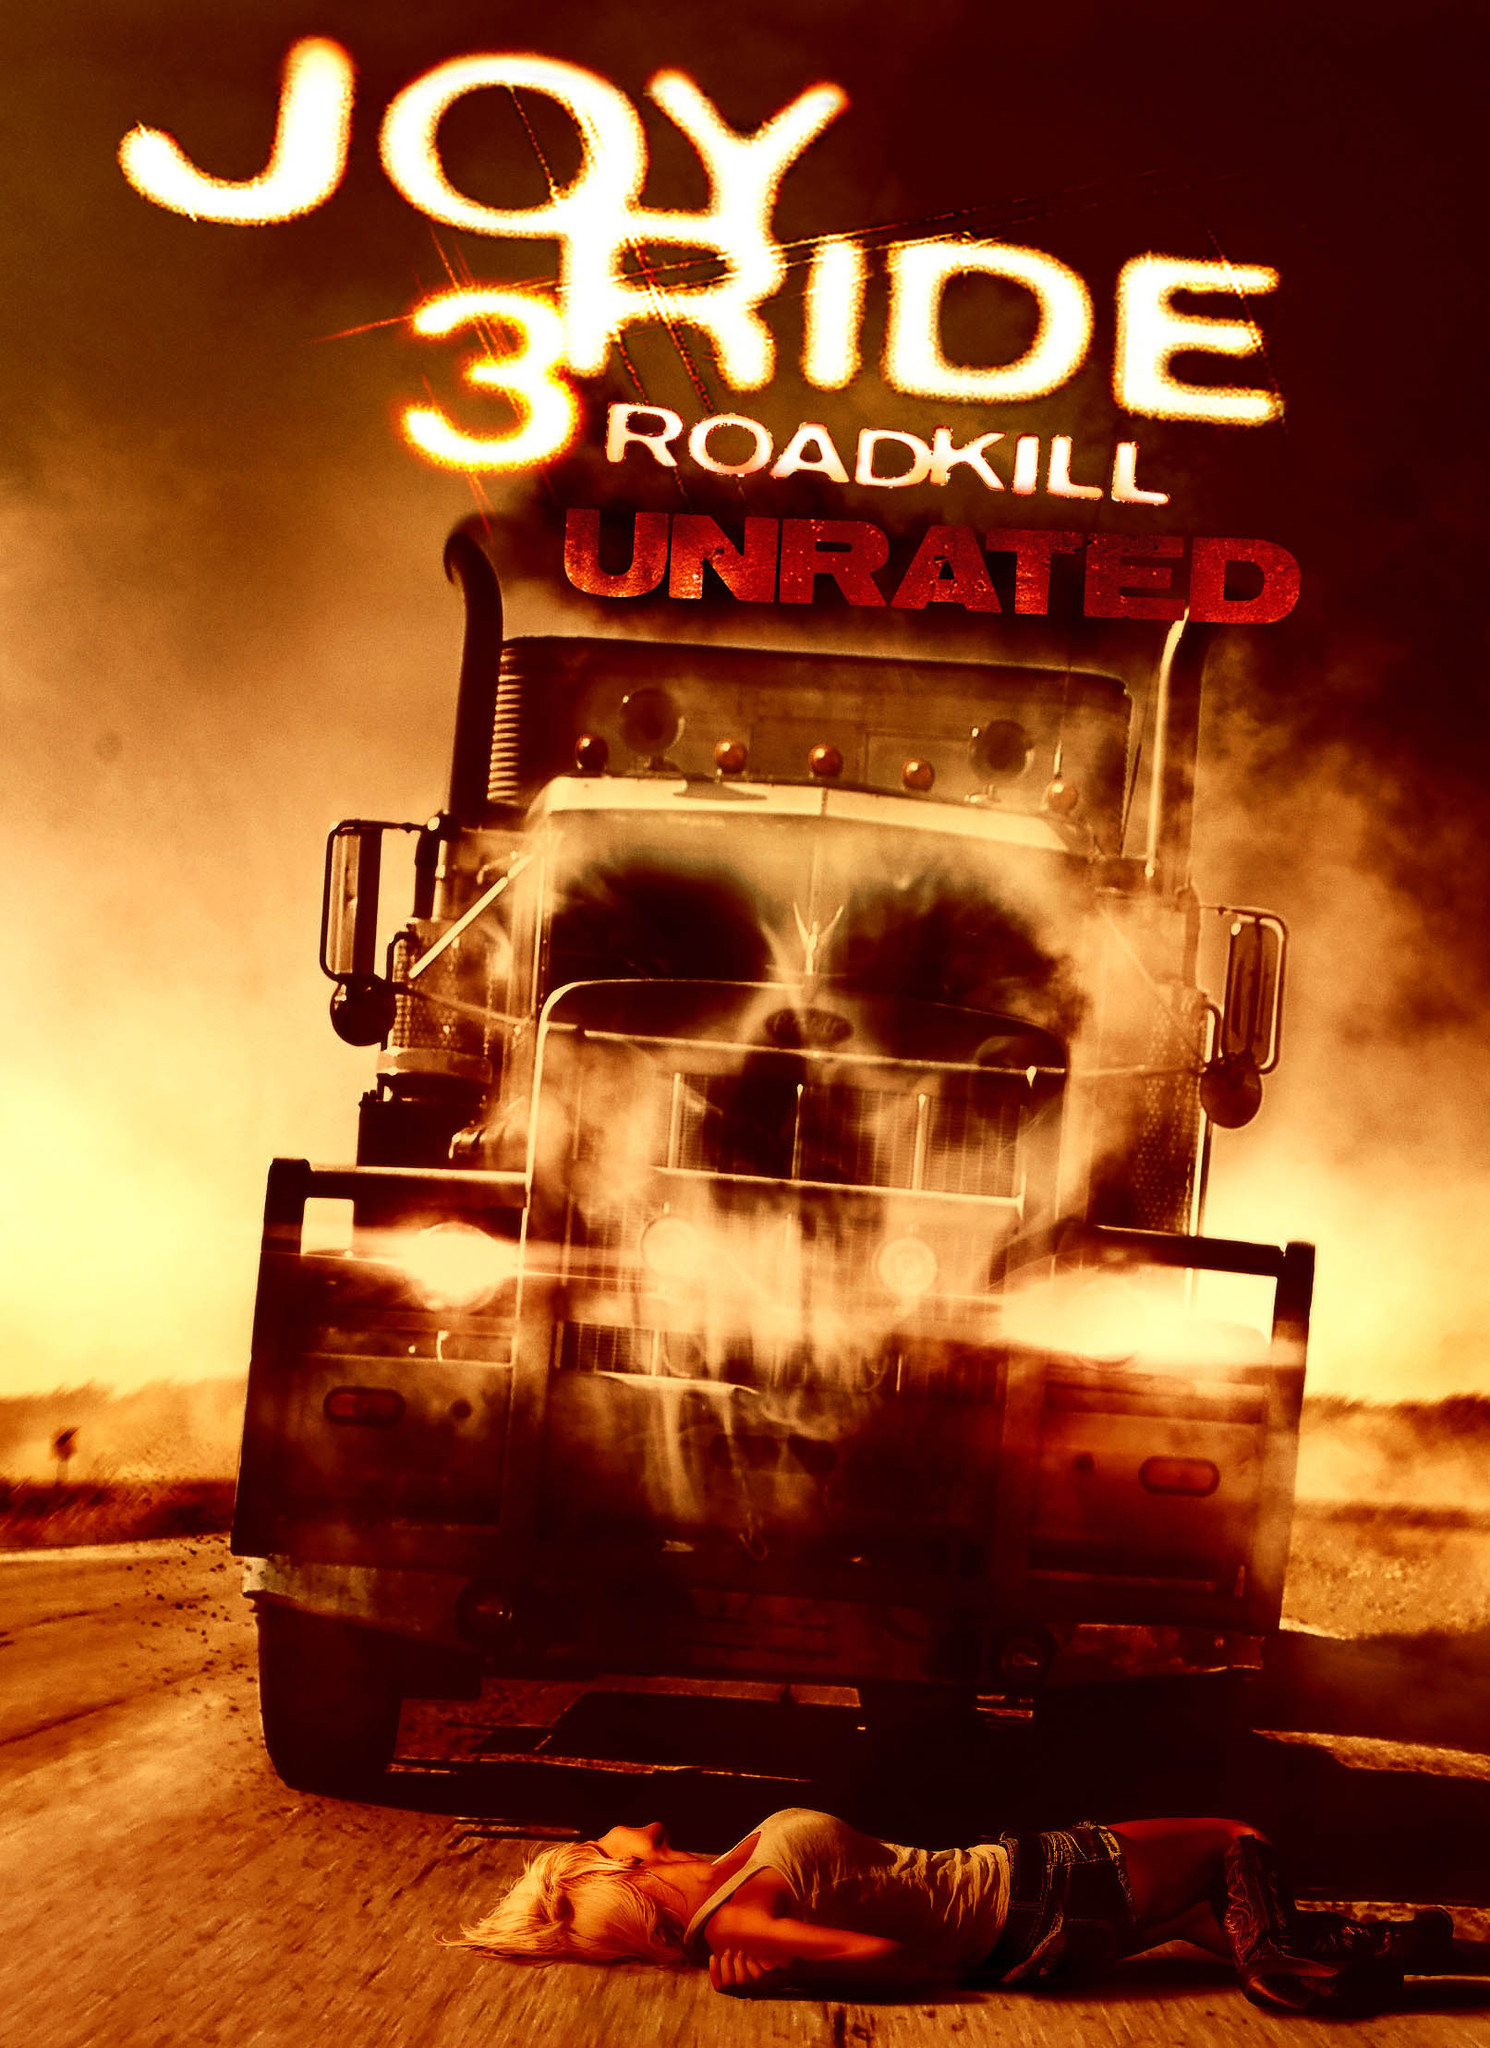 Joy Ride 3: Road Kill (2014) เกมหยอก หลอกไปเชือด 3 ถนนสายเลือด Ken Kirzinger